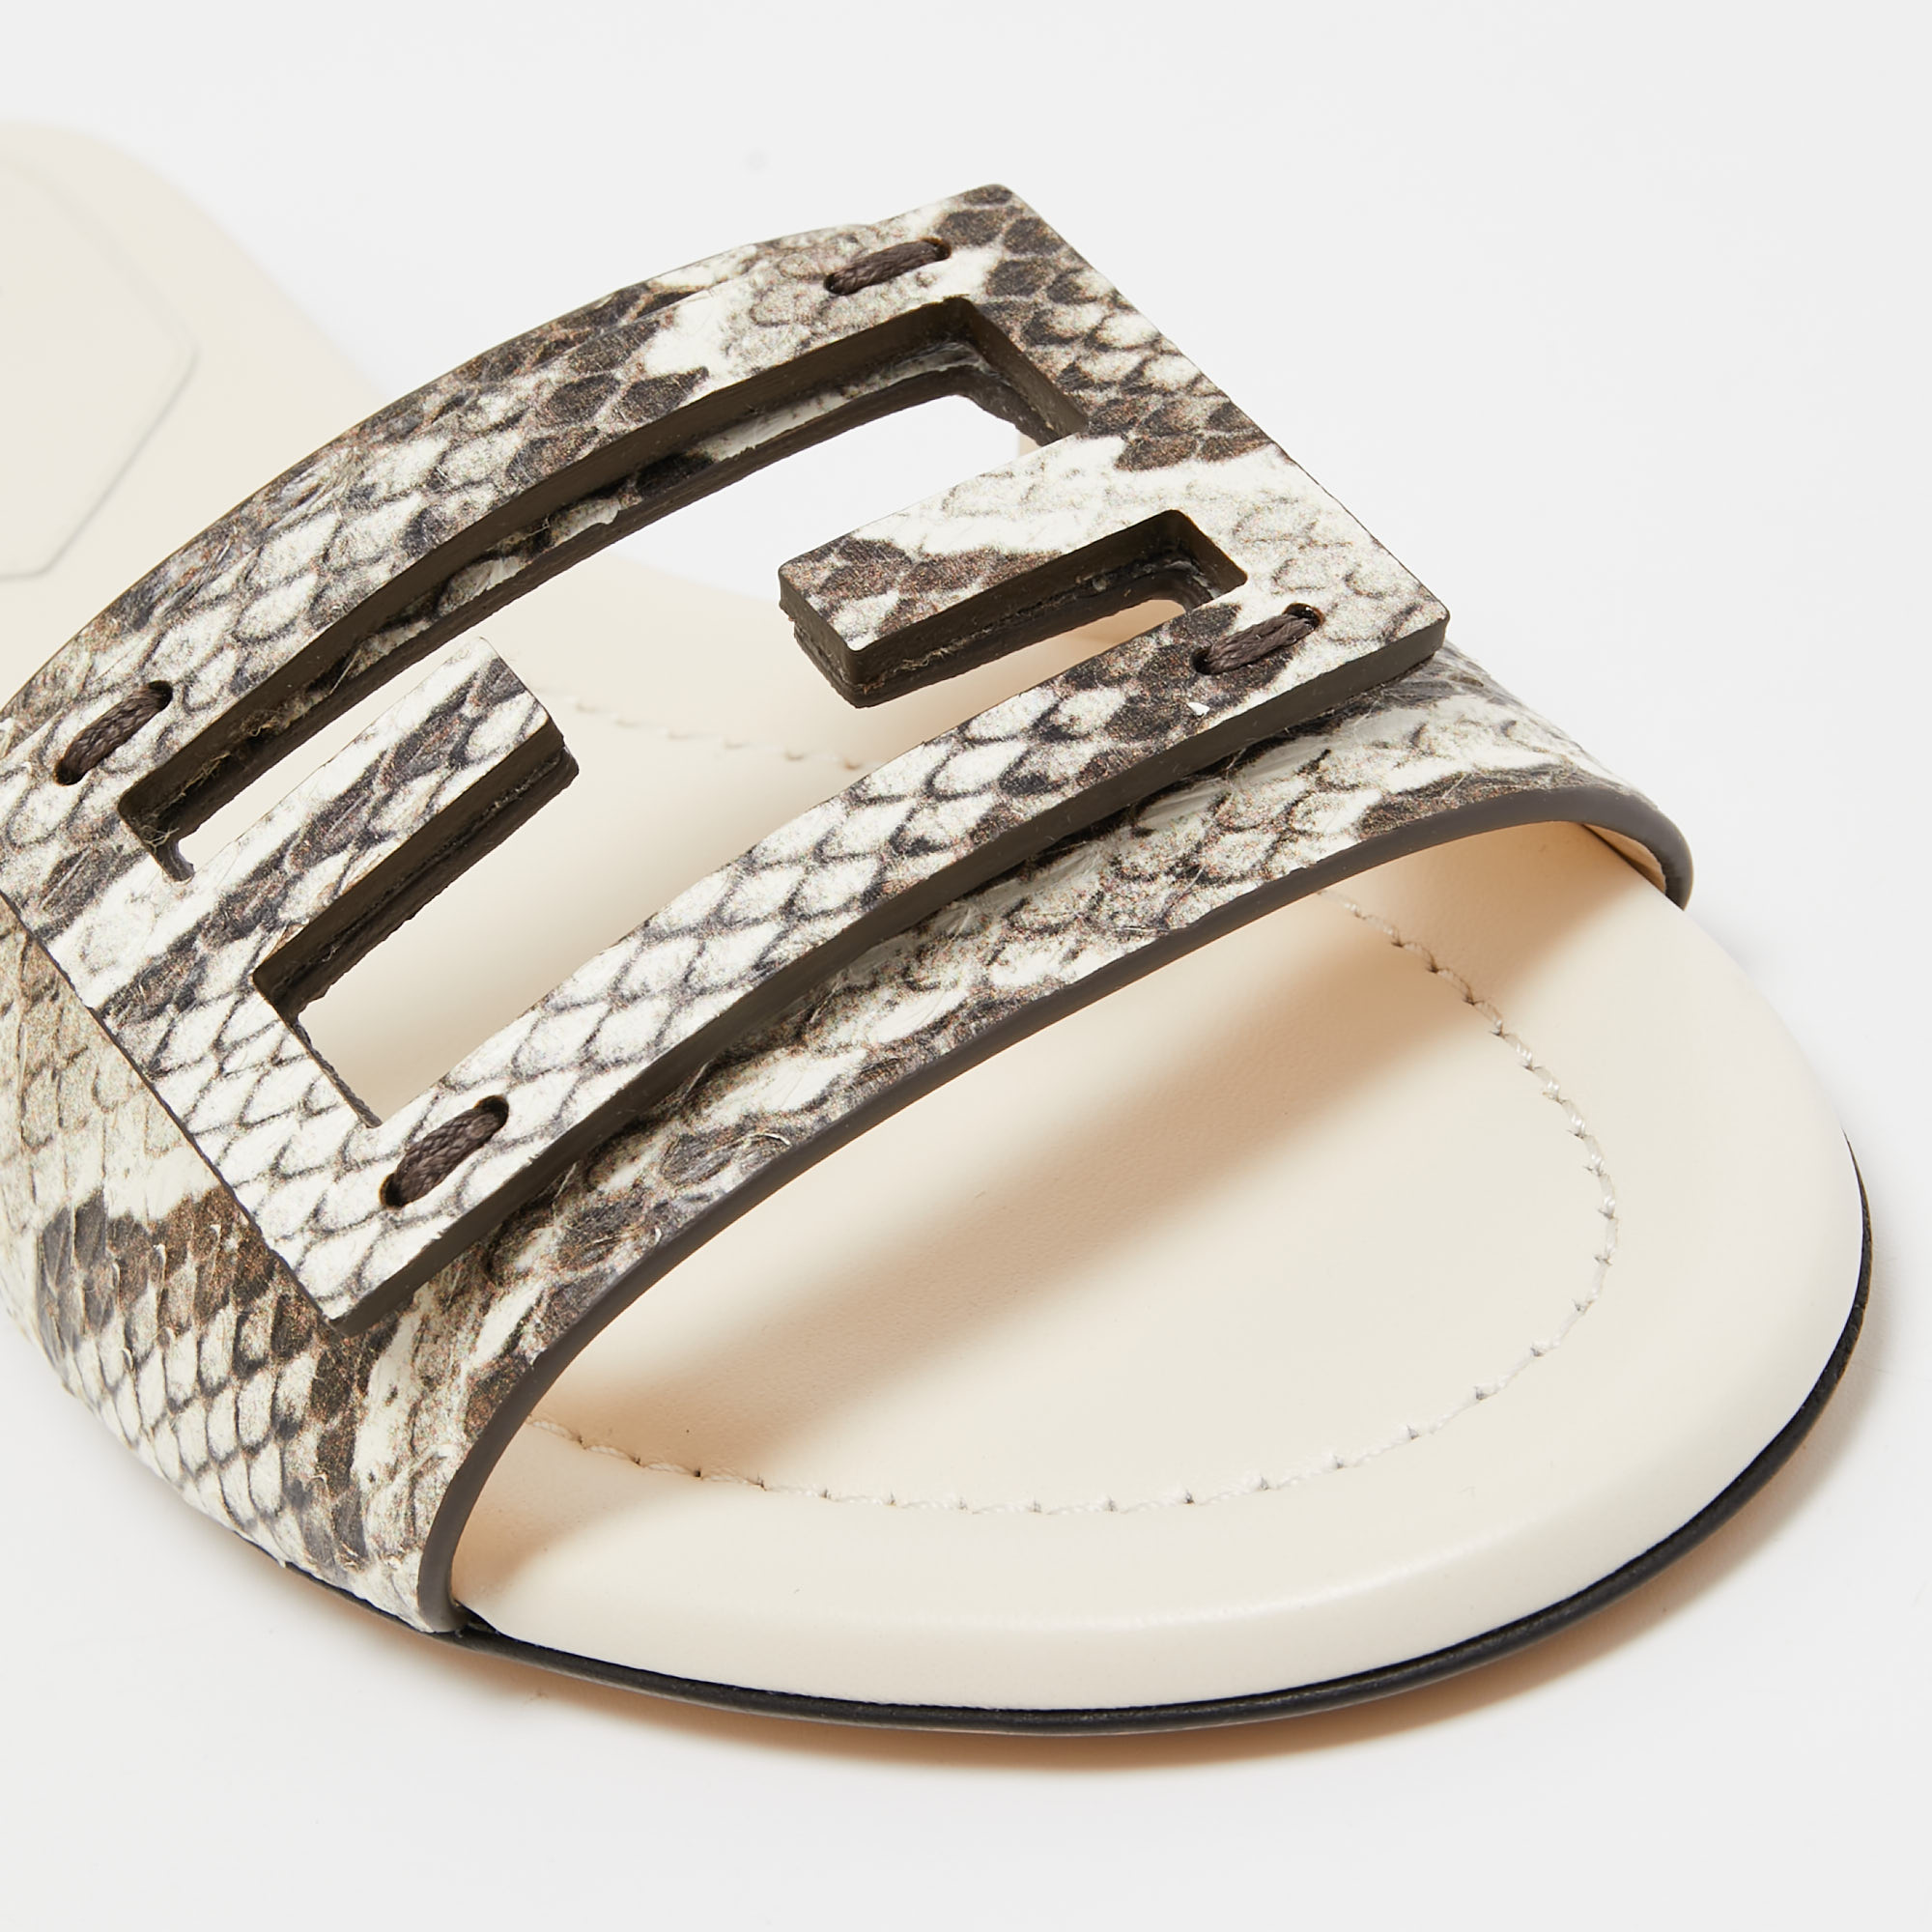 Fendi Beige/Cream Python Embossed Leather Baguette Flat Slides Size 35